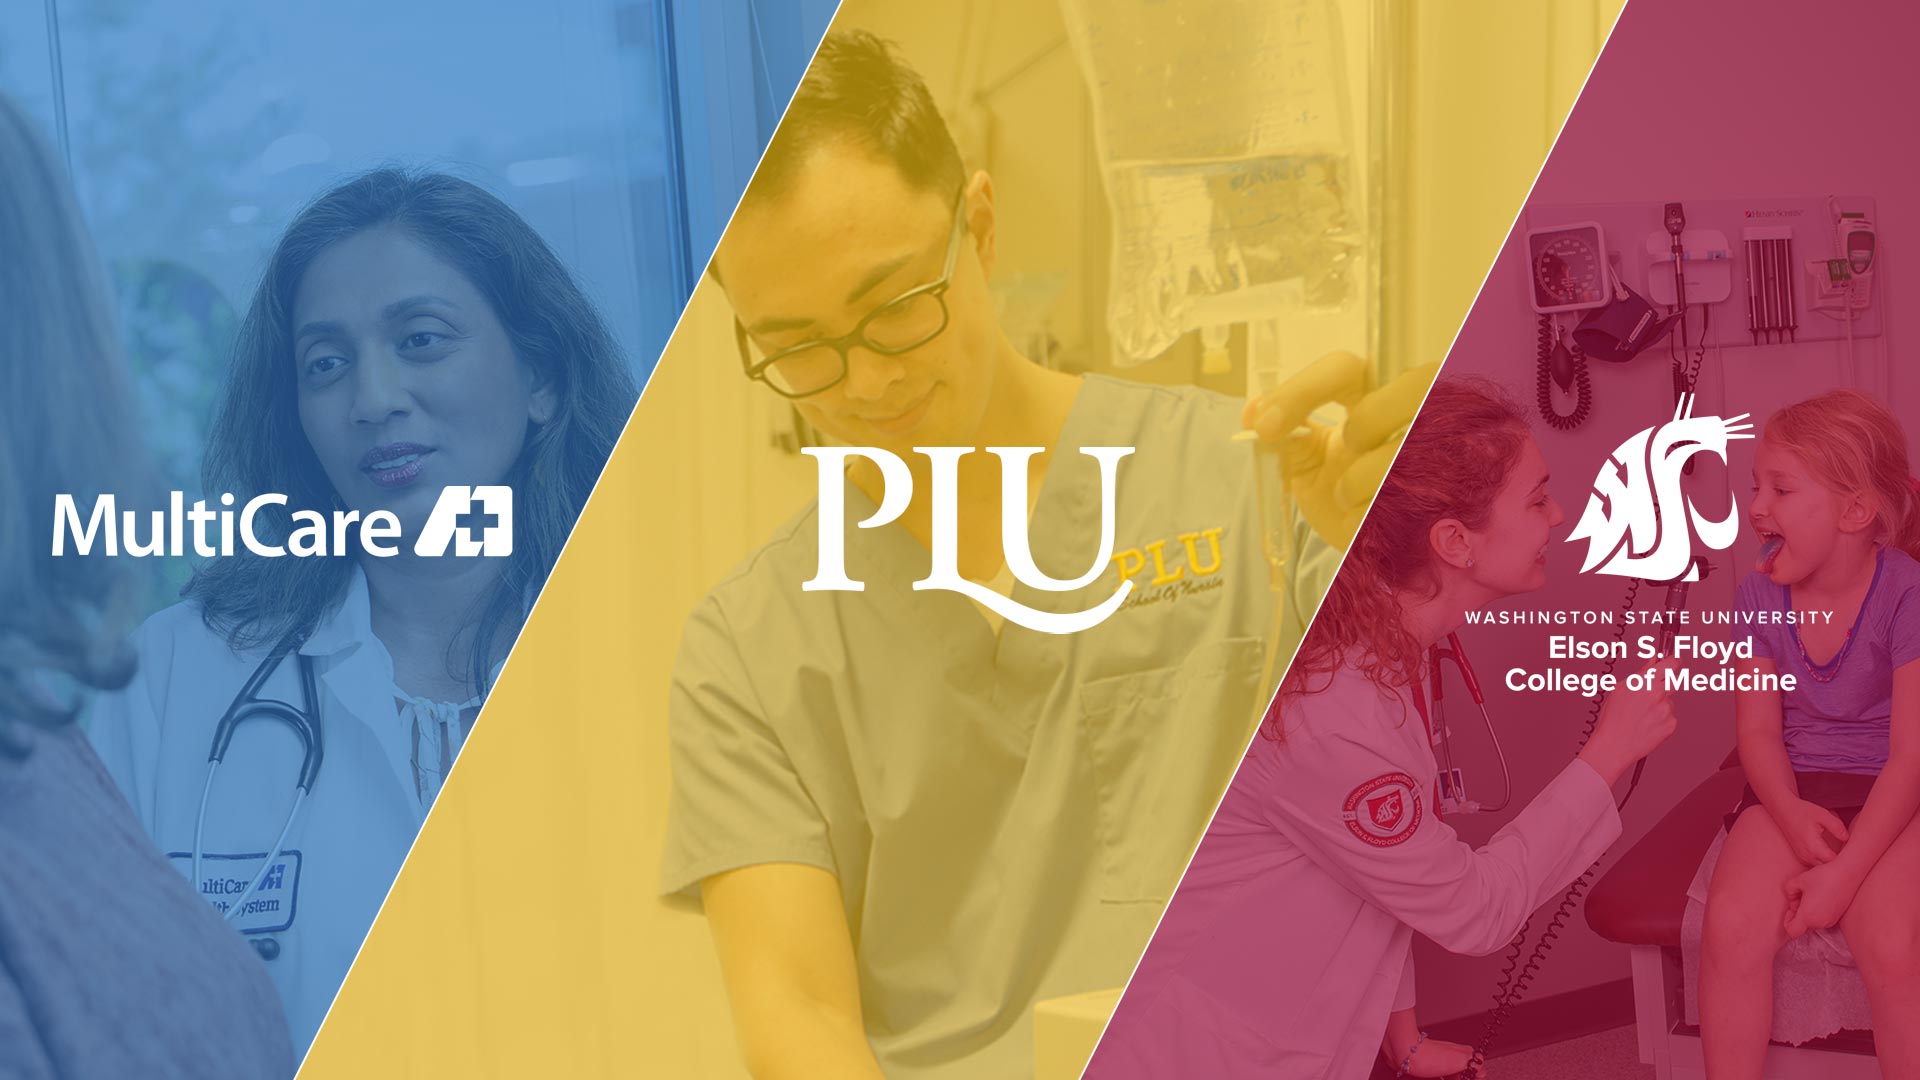 A threefold photo, showing images of PLU nursing, MultiCare nursing, and WSU nursing.